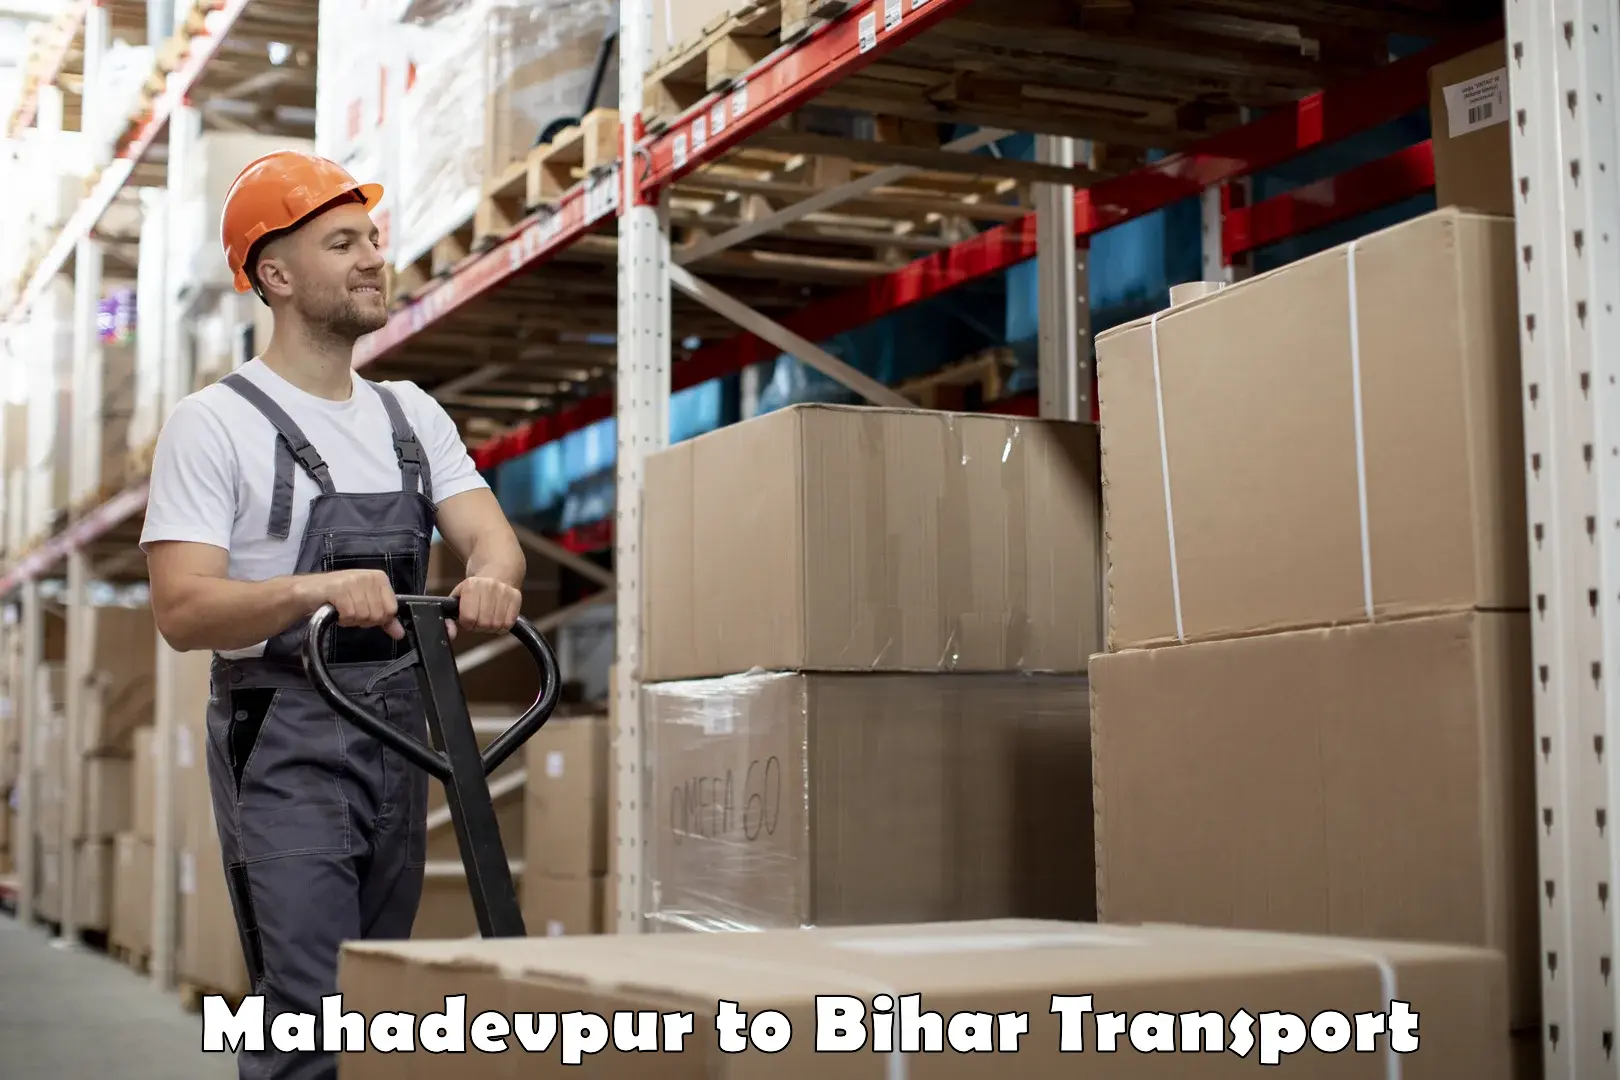 Sending bike to another city Mahadevpur to Bihar